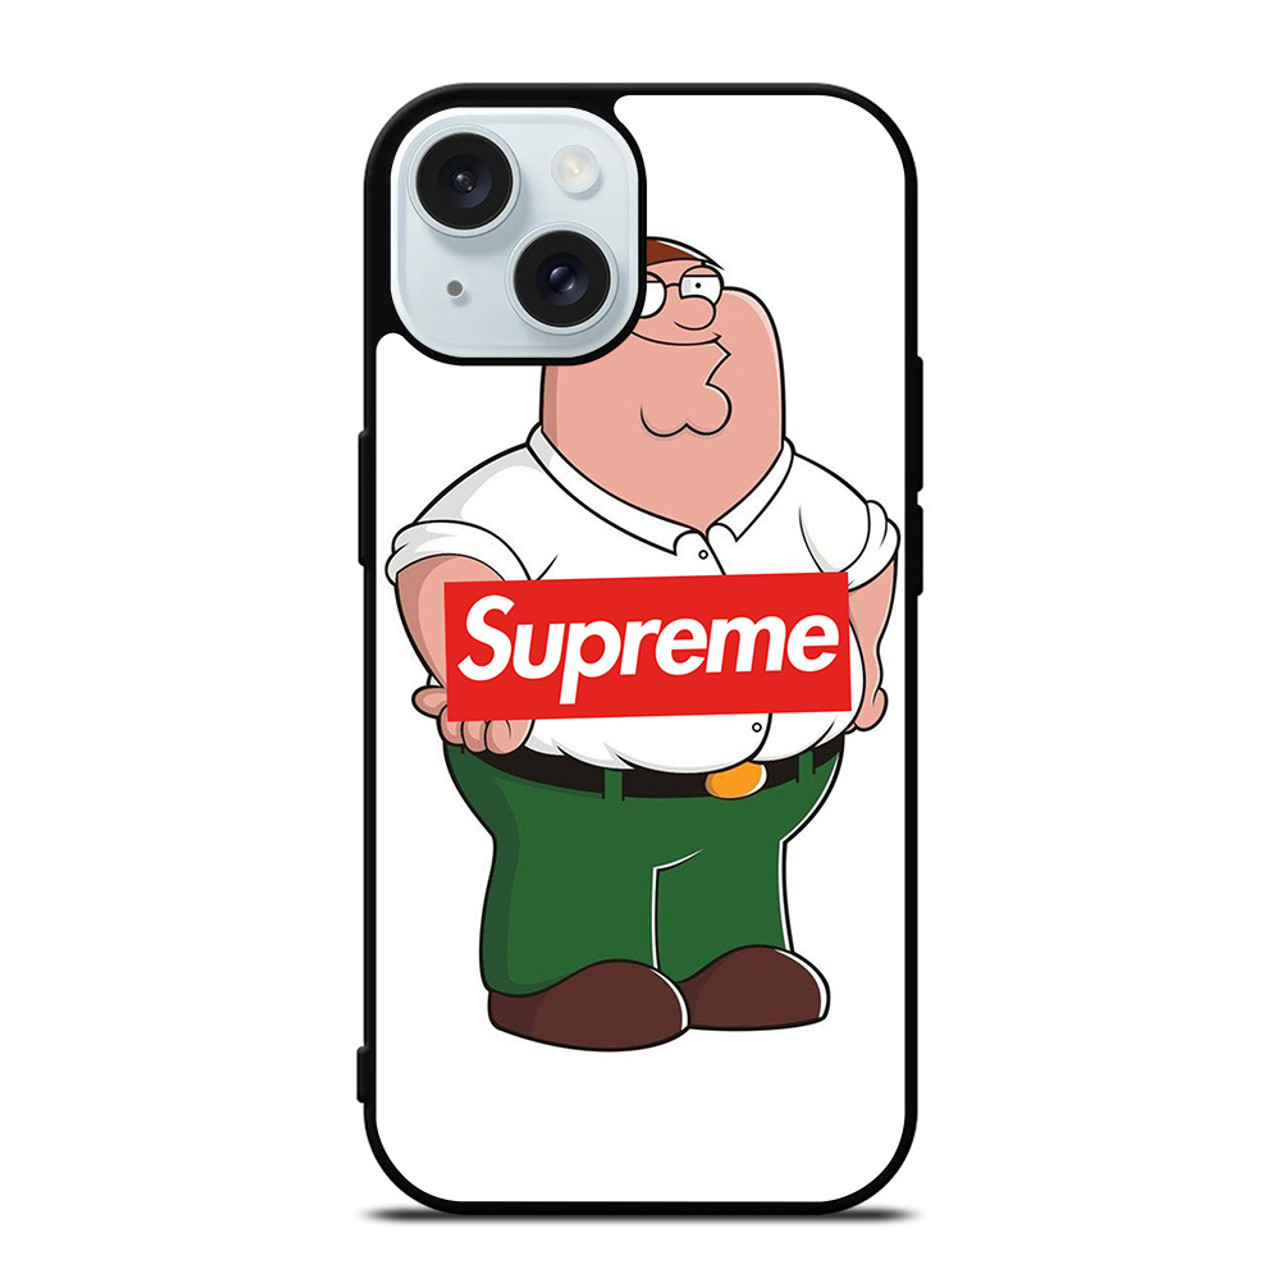 Supreme Hoodie Boy iPhone 7 Case